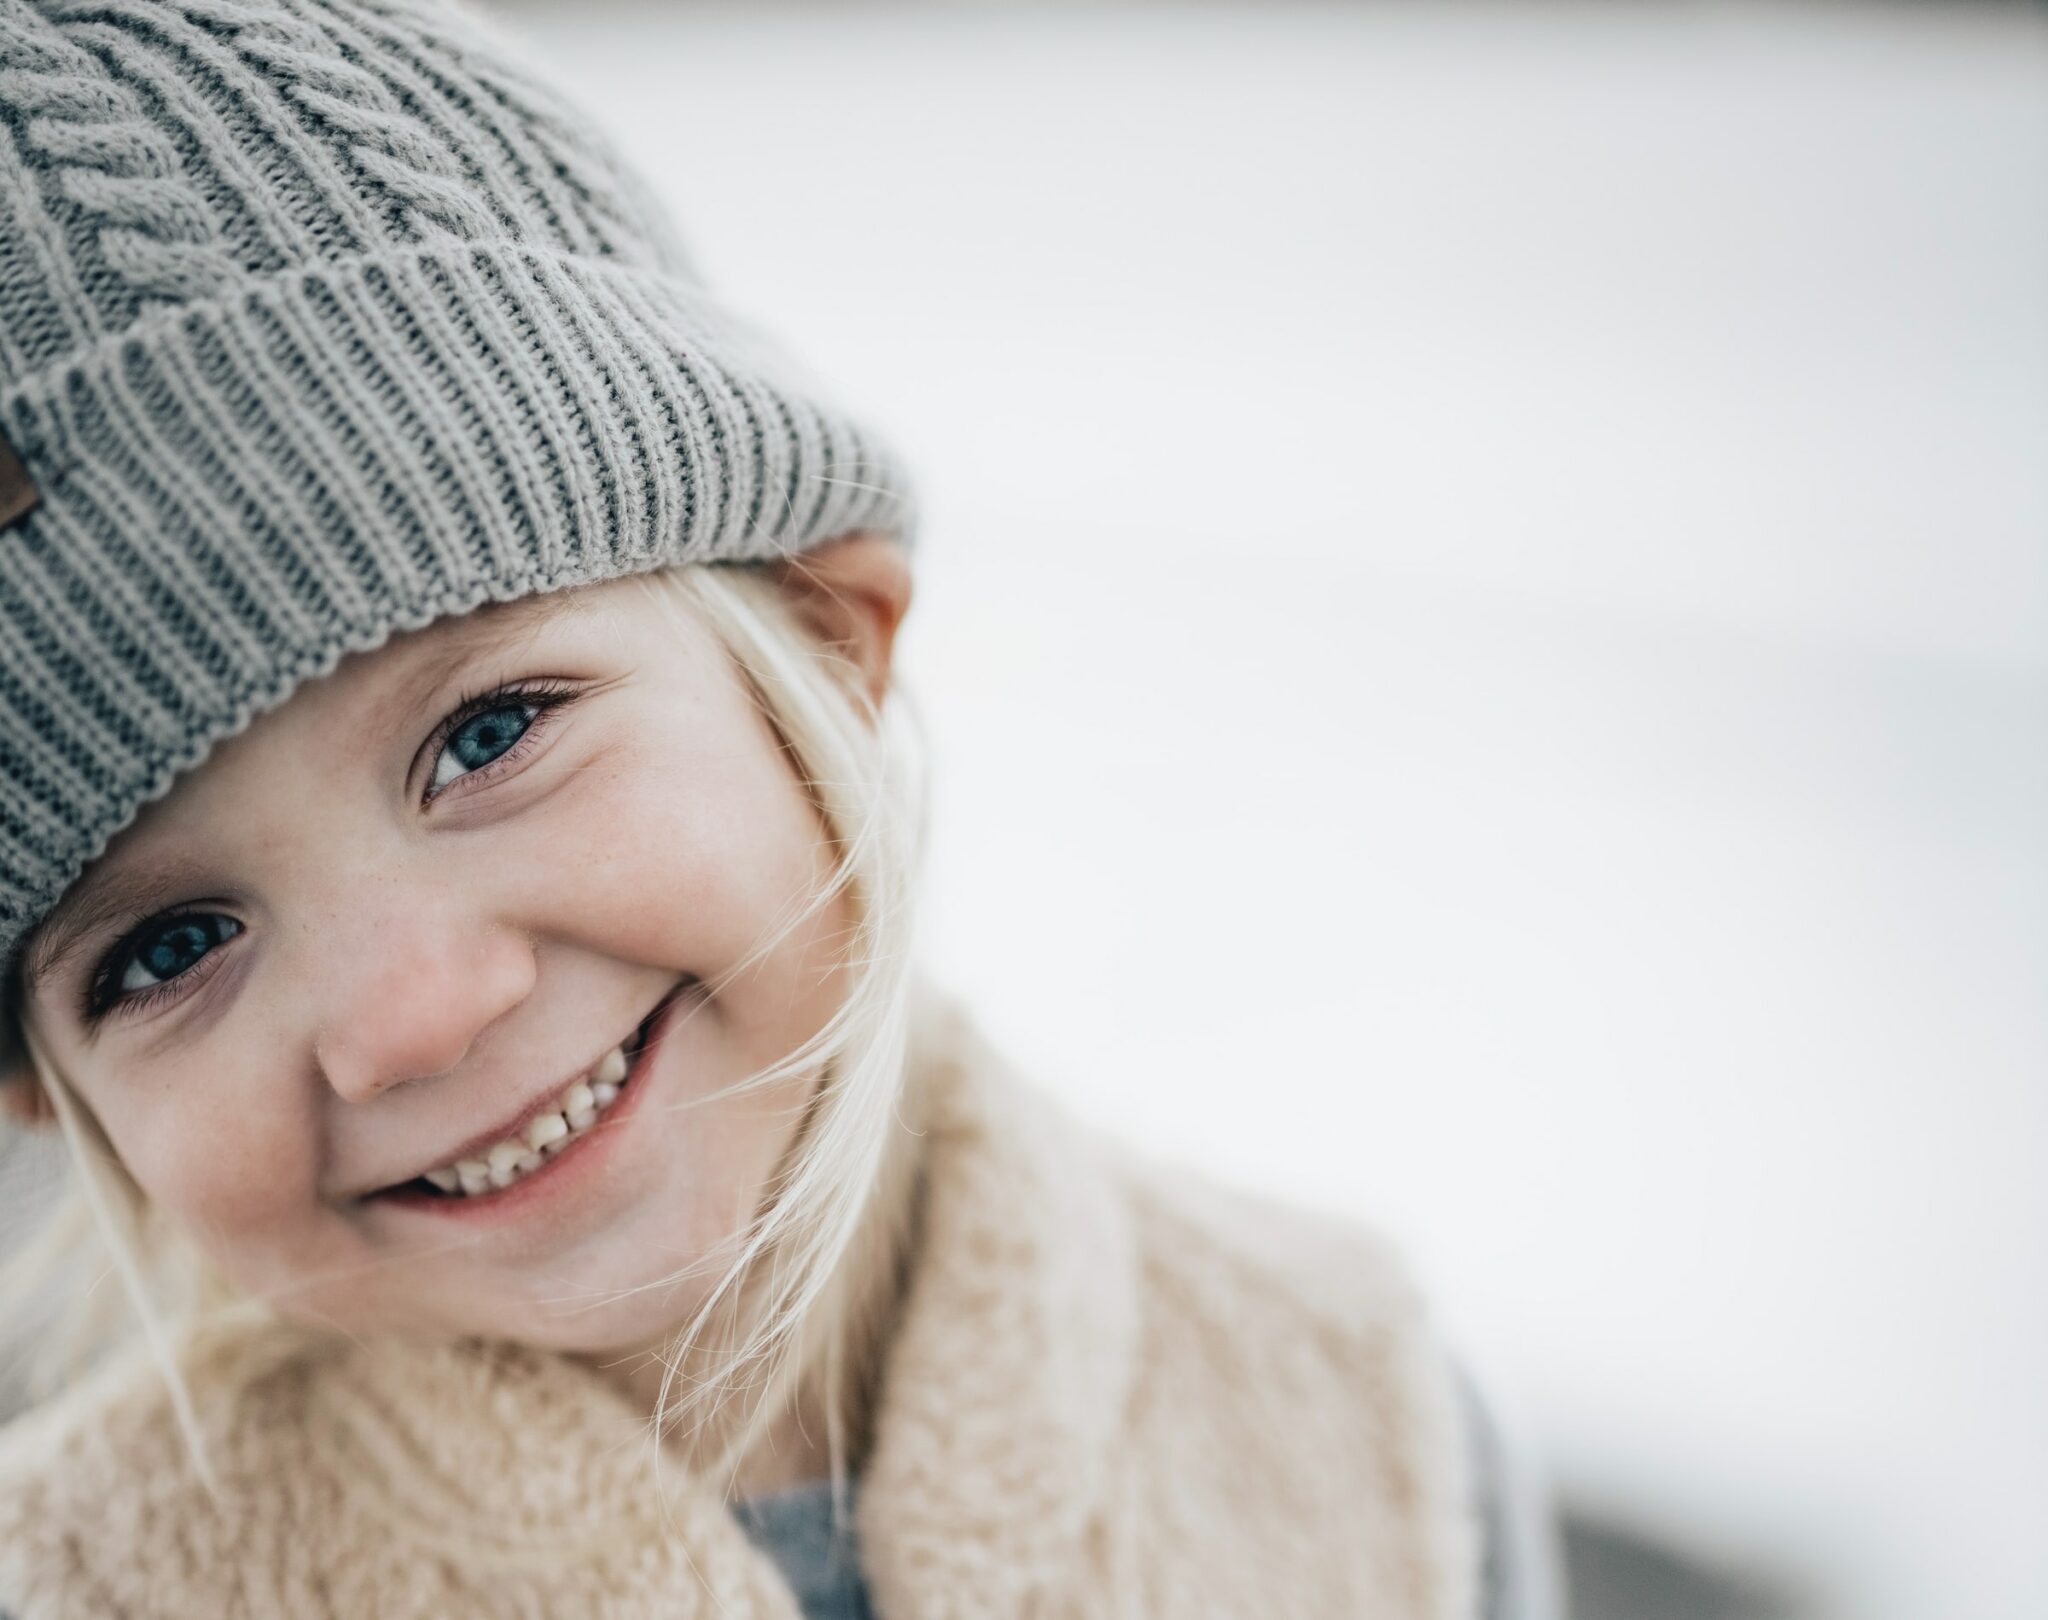 little girl wearing a stocking cap